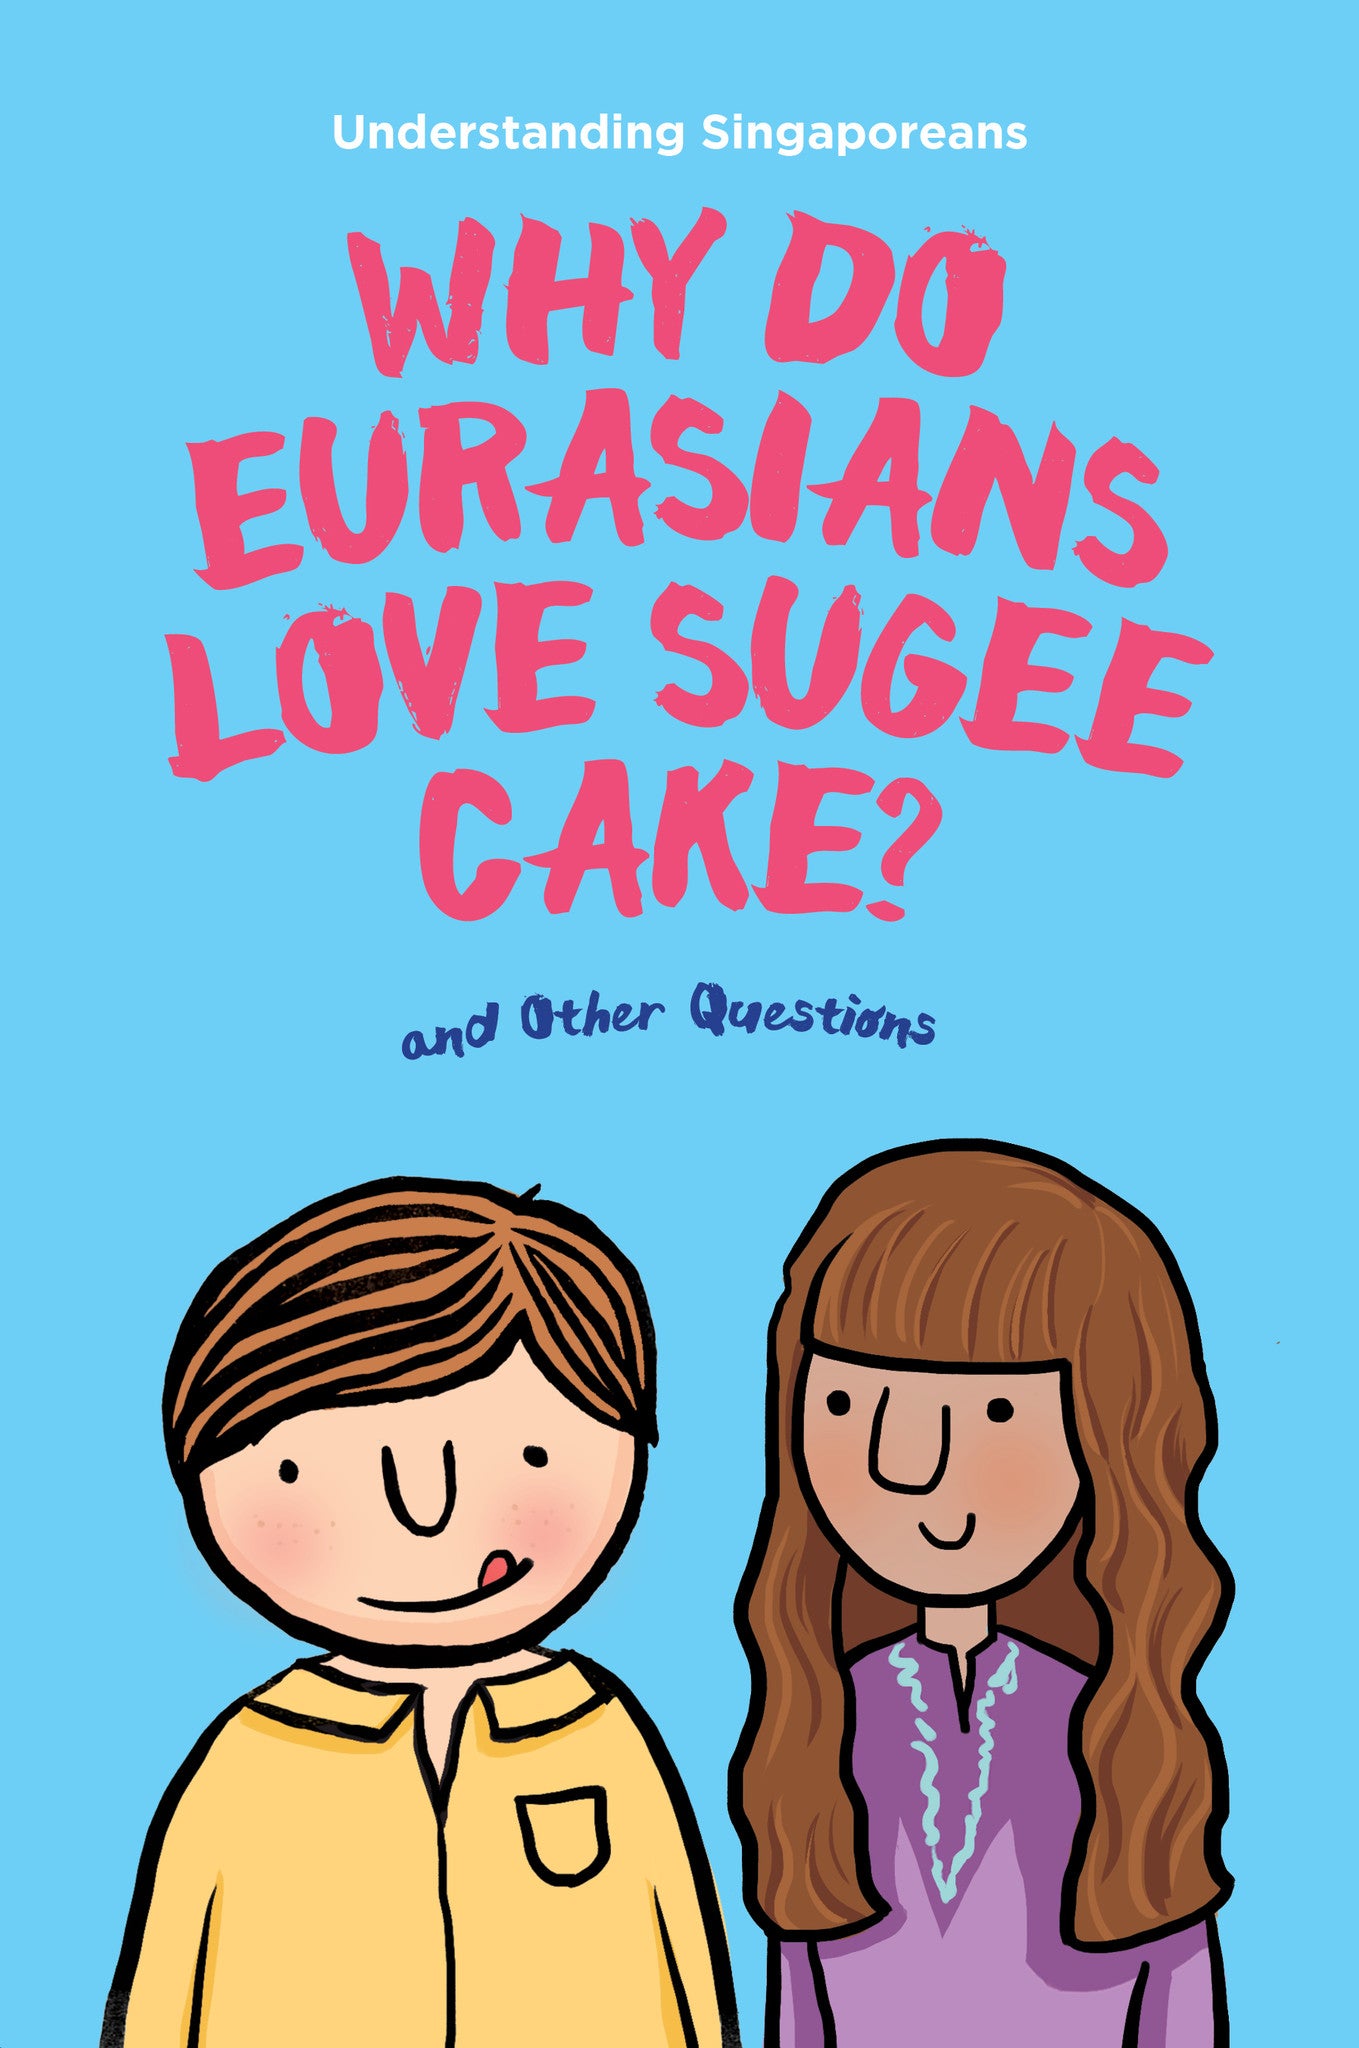 Understanding Singaporeans: Why Do Eurasians Love Sugee Cake?